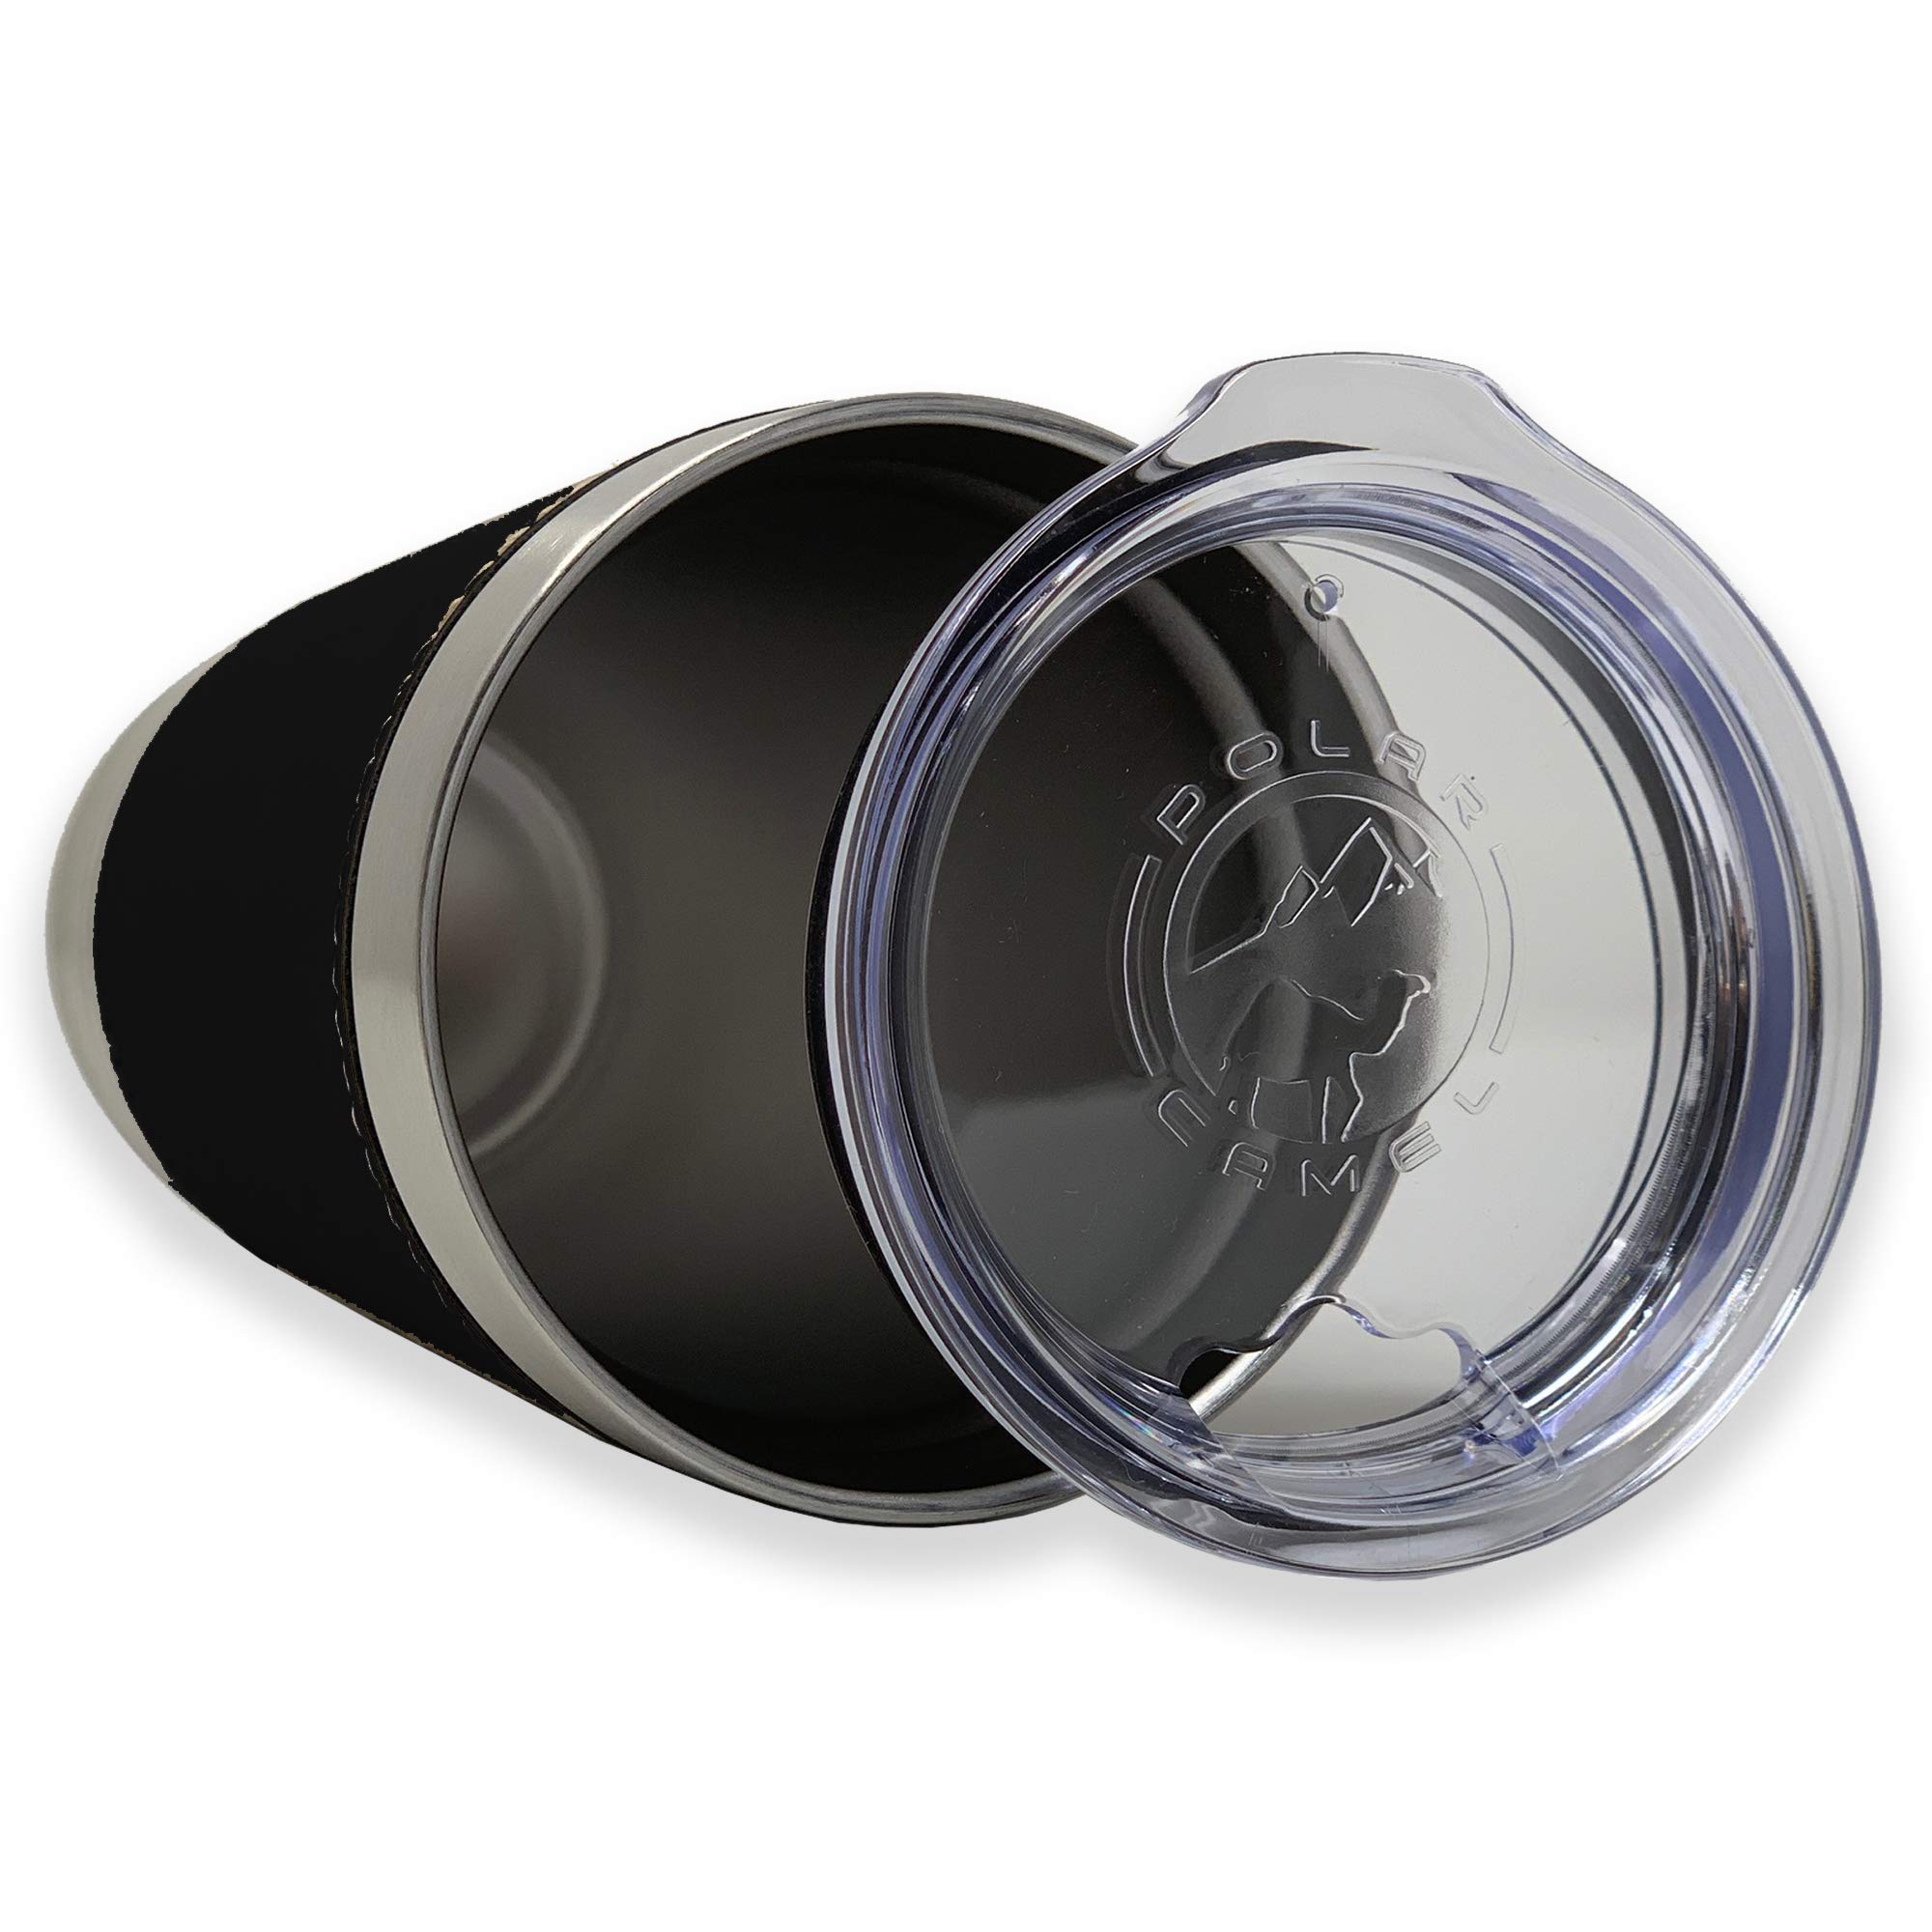 LaserGram 20oz Vacuum Insulated Tumbler Mug, Drum Set, Personalized Engraving Included (Faux Leather, Black)